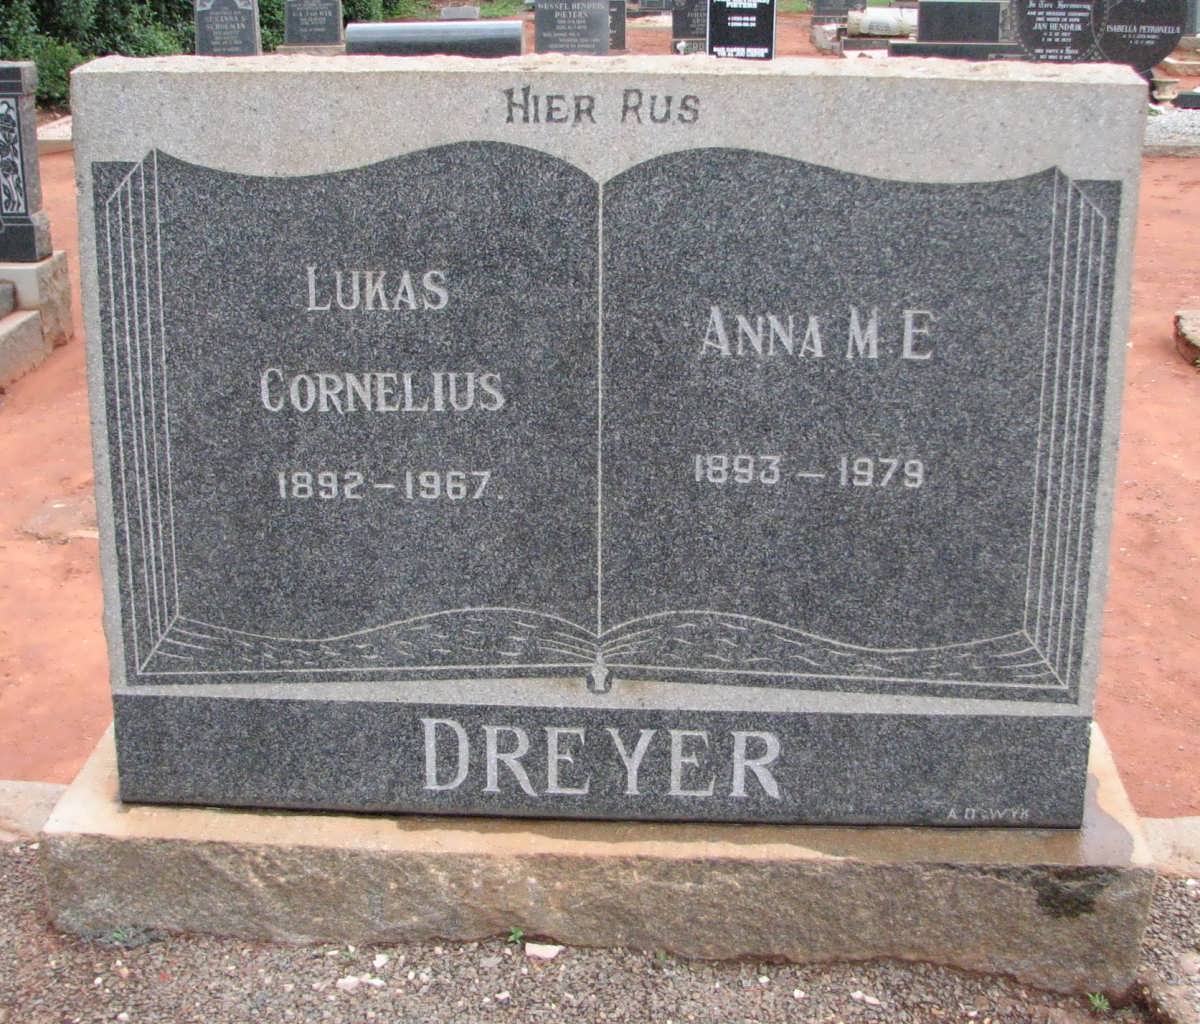 DREYER Lukas Cornelius 1892-1967 & Anna M.E. 1893-1979